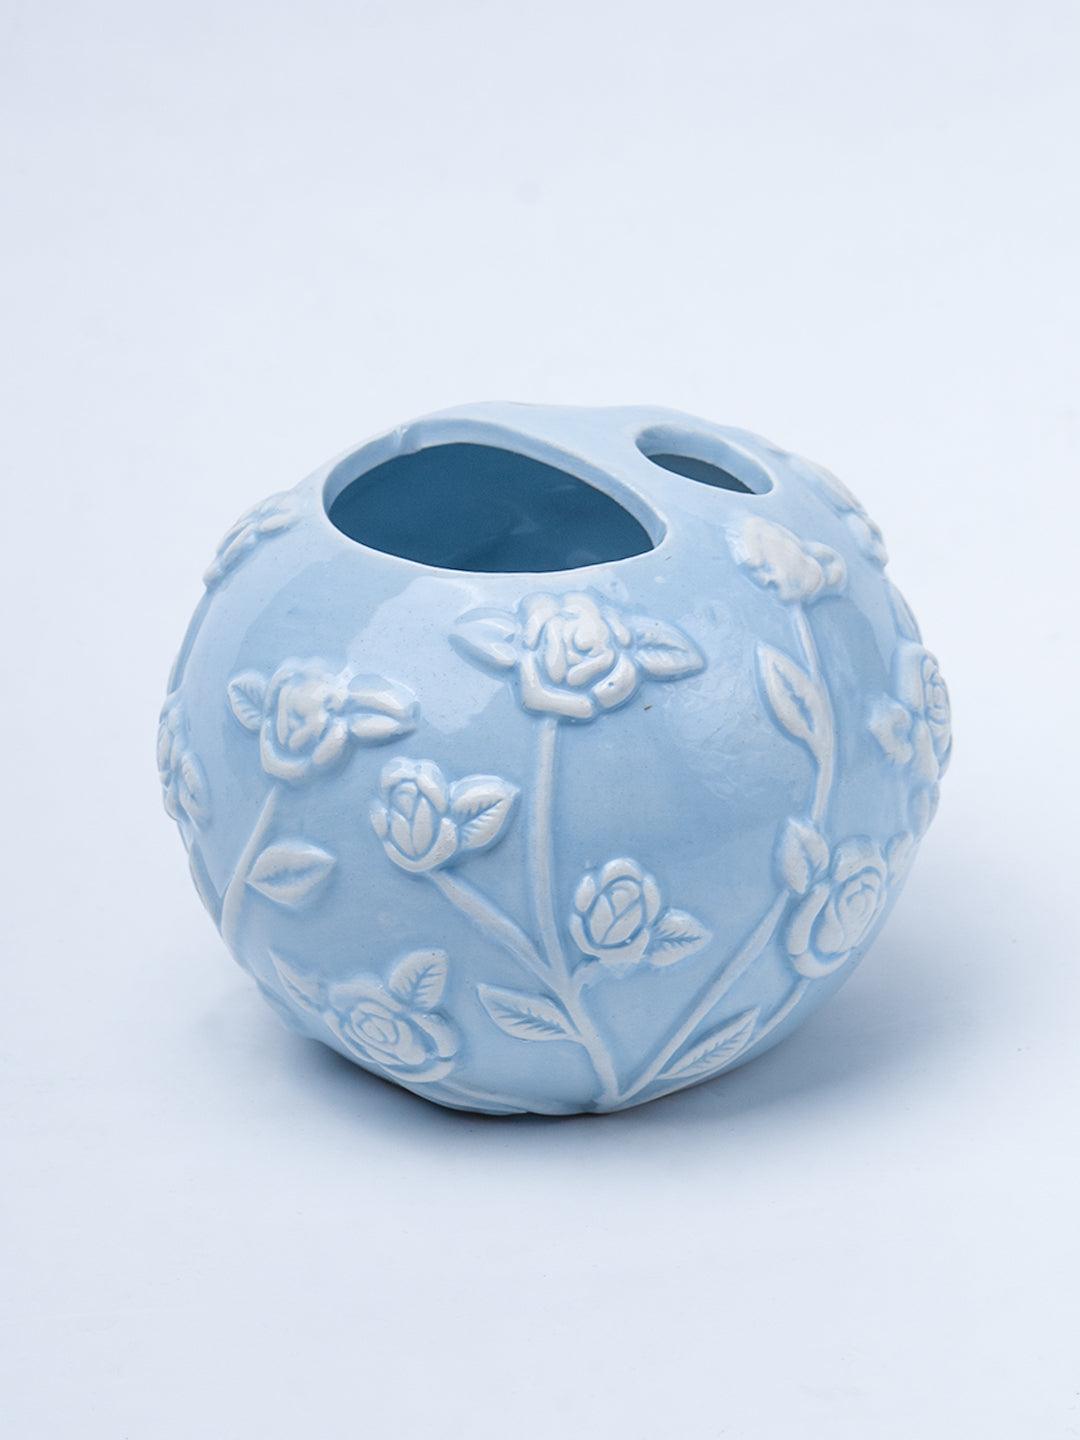 Blue Ceramic Bathroom Set Of 4 - Floral Design, Bath Accessories - 5